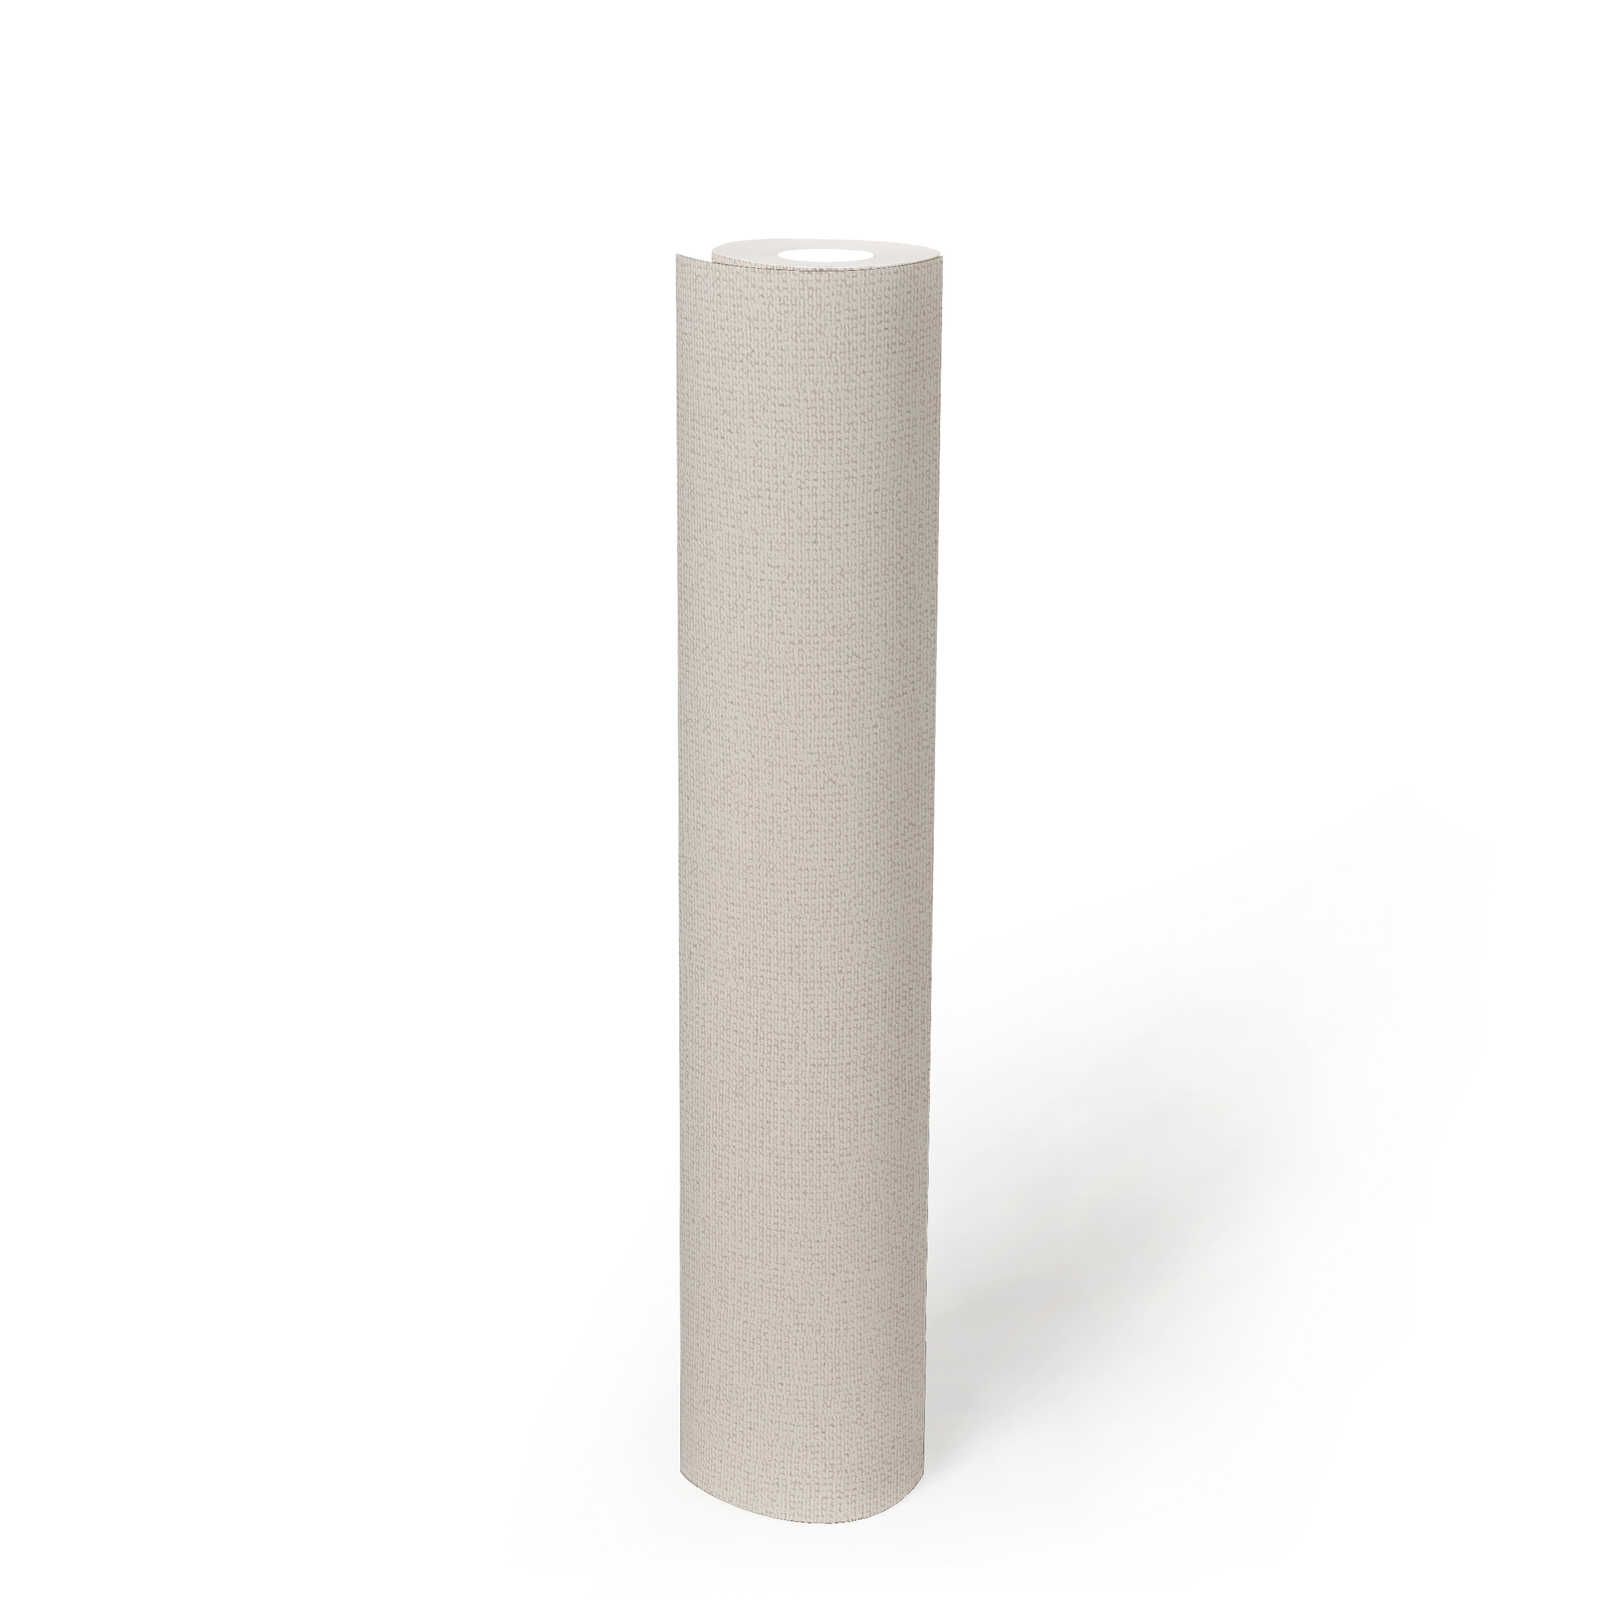             Matt non-woven wallpaper with linen look structure - white, cream
        